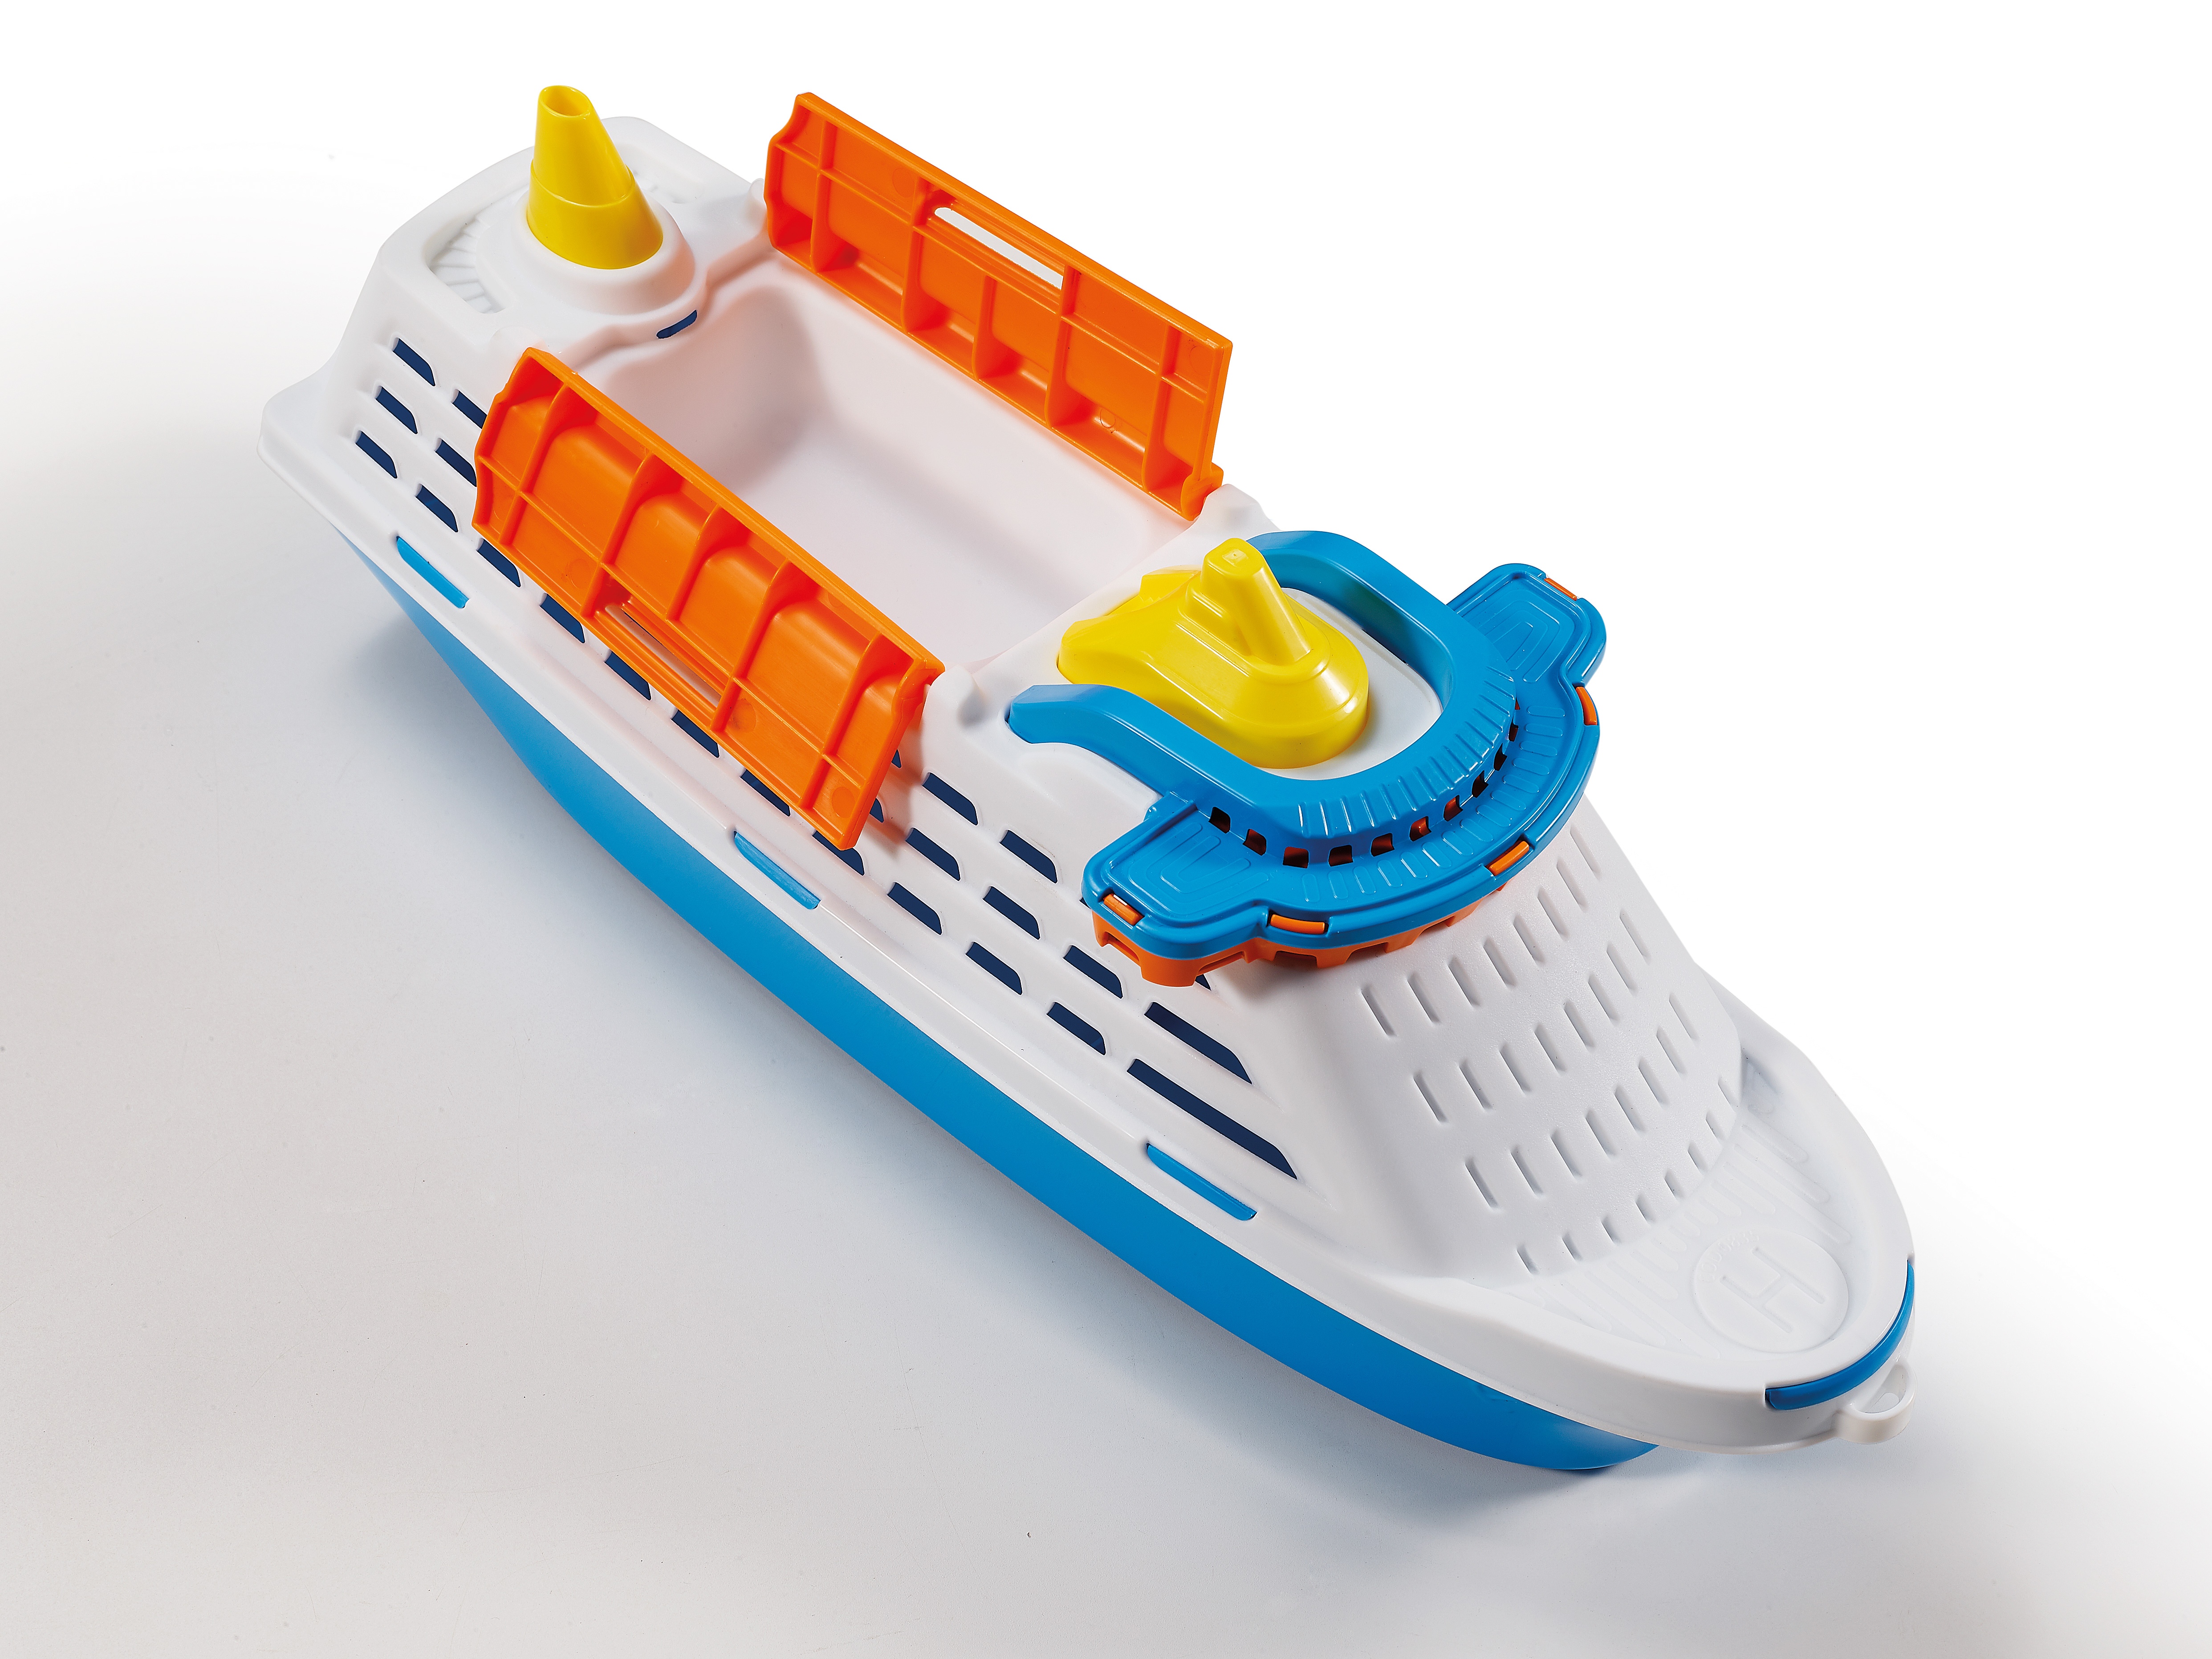 cruise ship bath toy